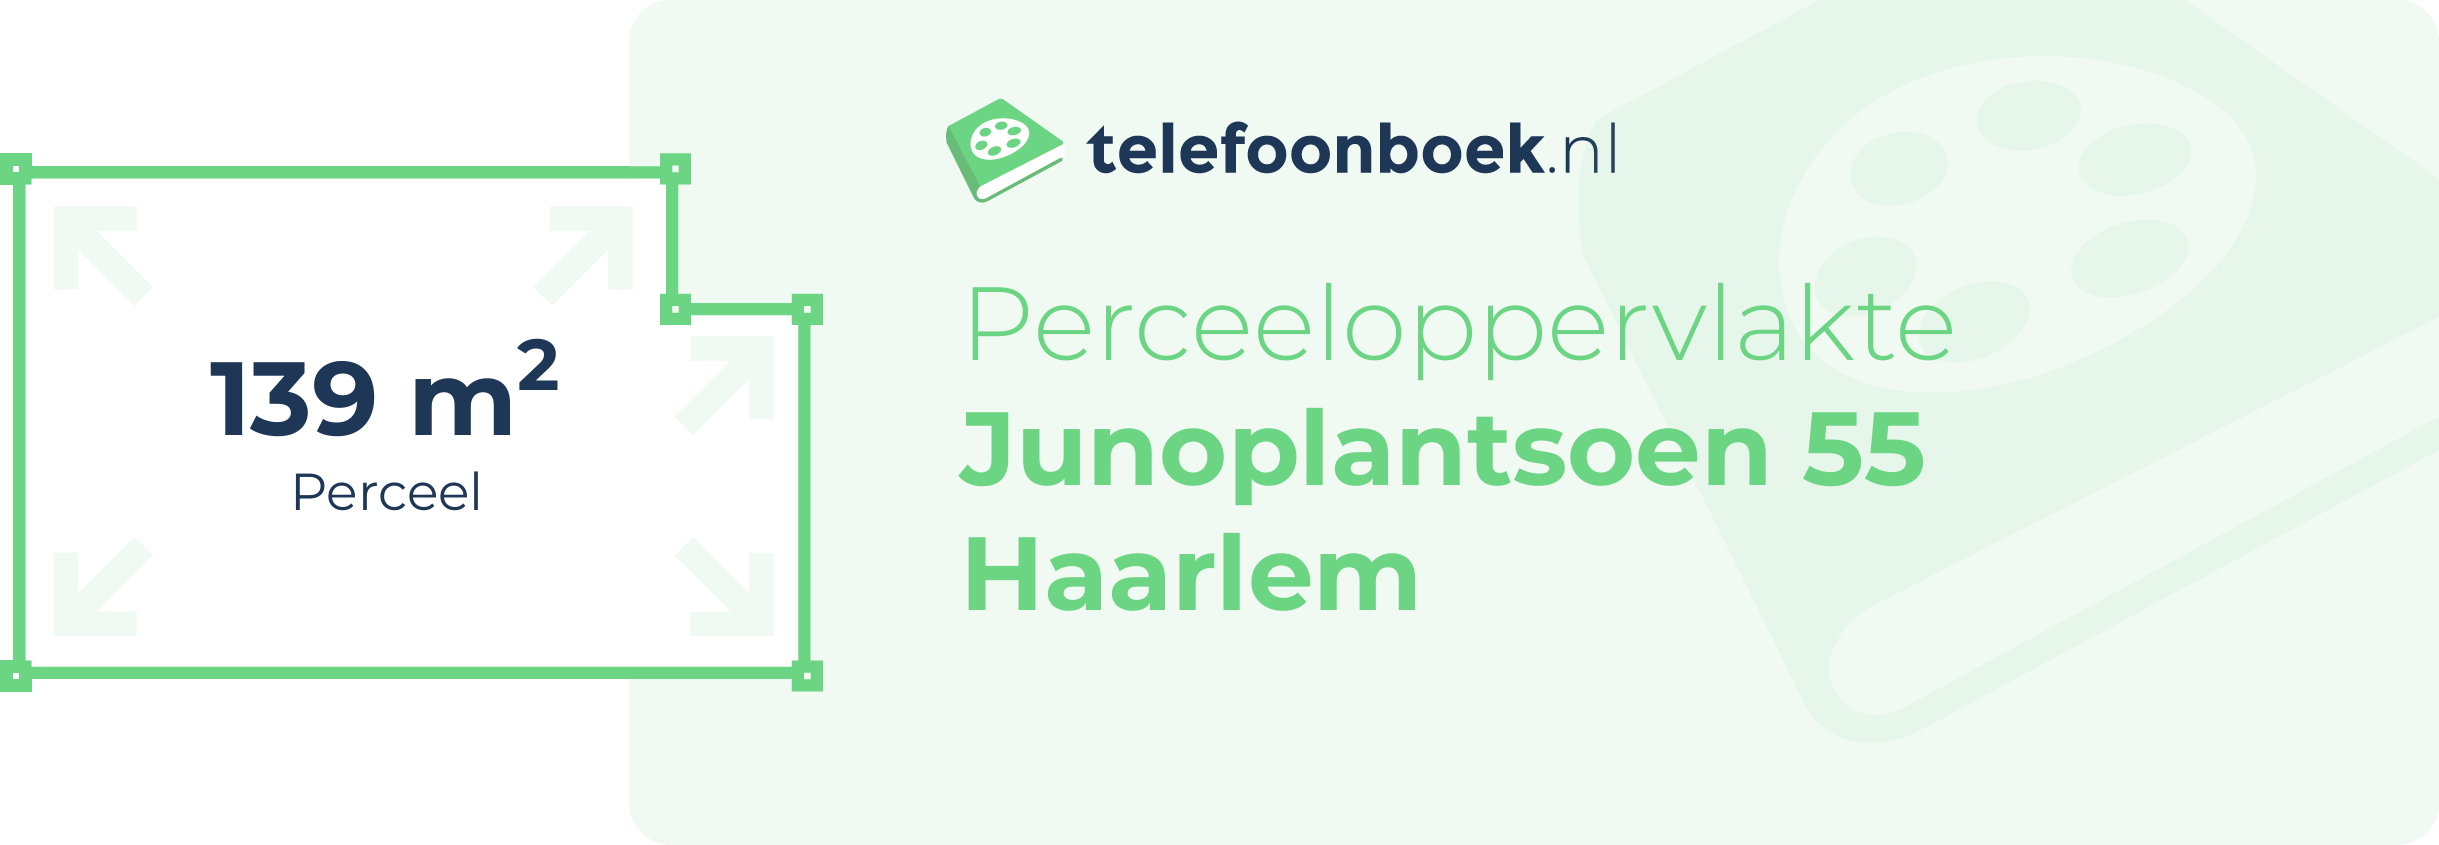 Perceeloppervlakte Junoplantsoen 55 Haarlem